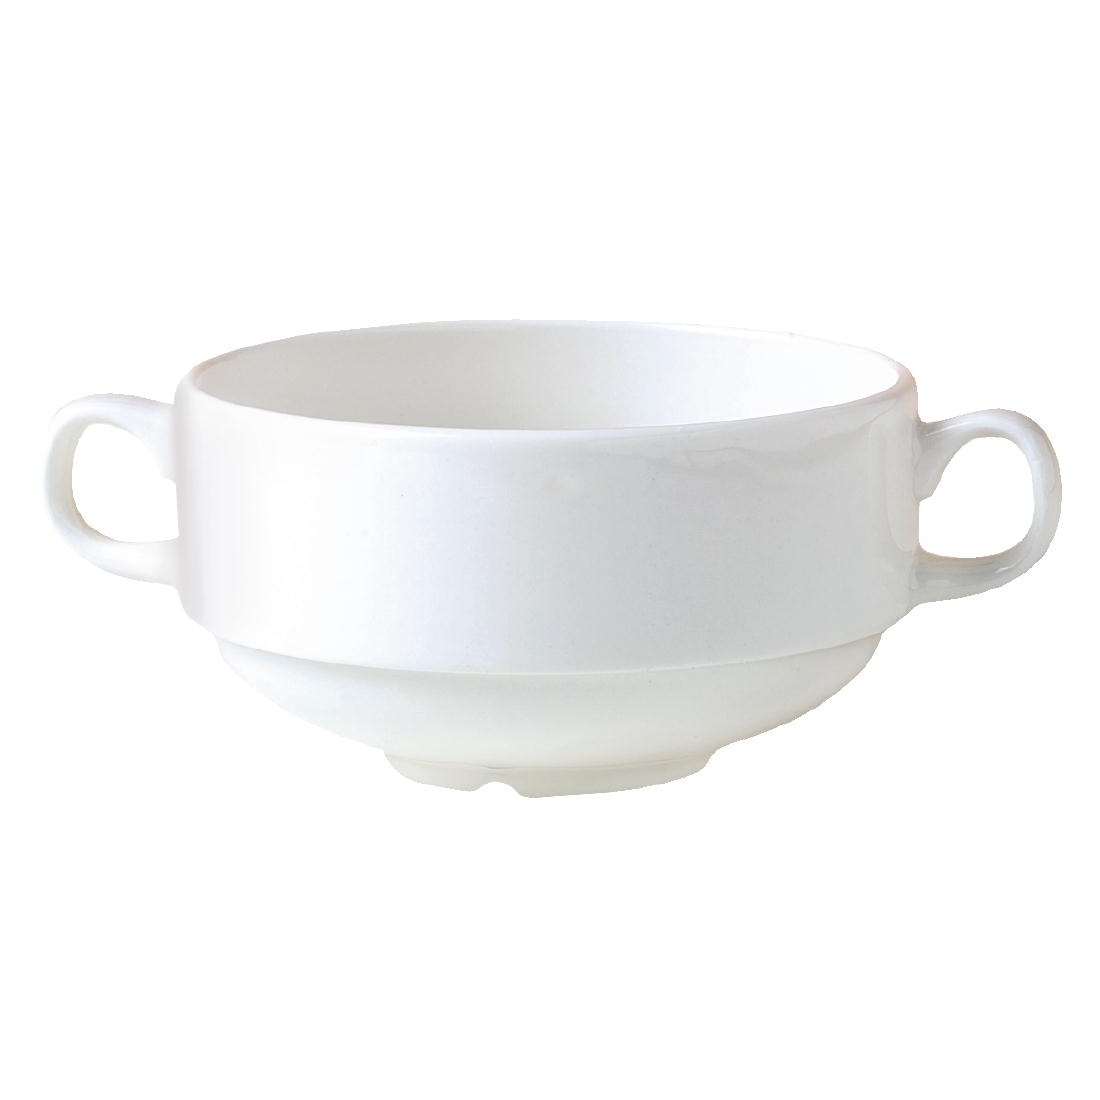 Steelite Monaco White Stacking Handled Soup Cups 285ml